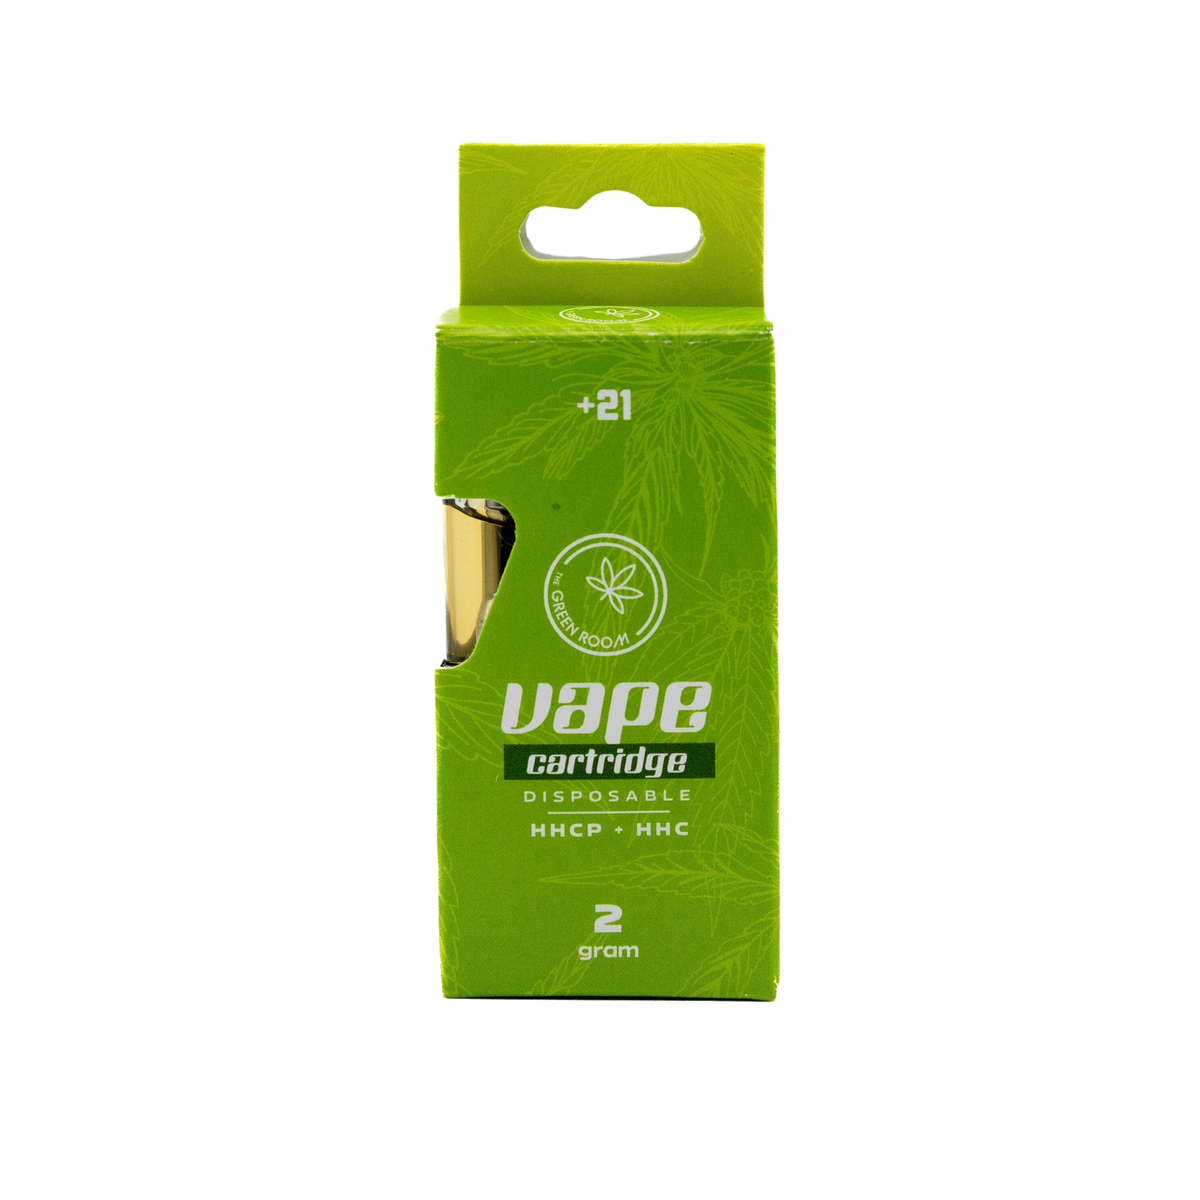 Disposable Vape Cartridge - 2 Grams